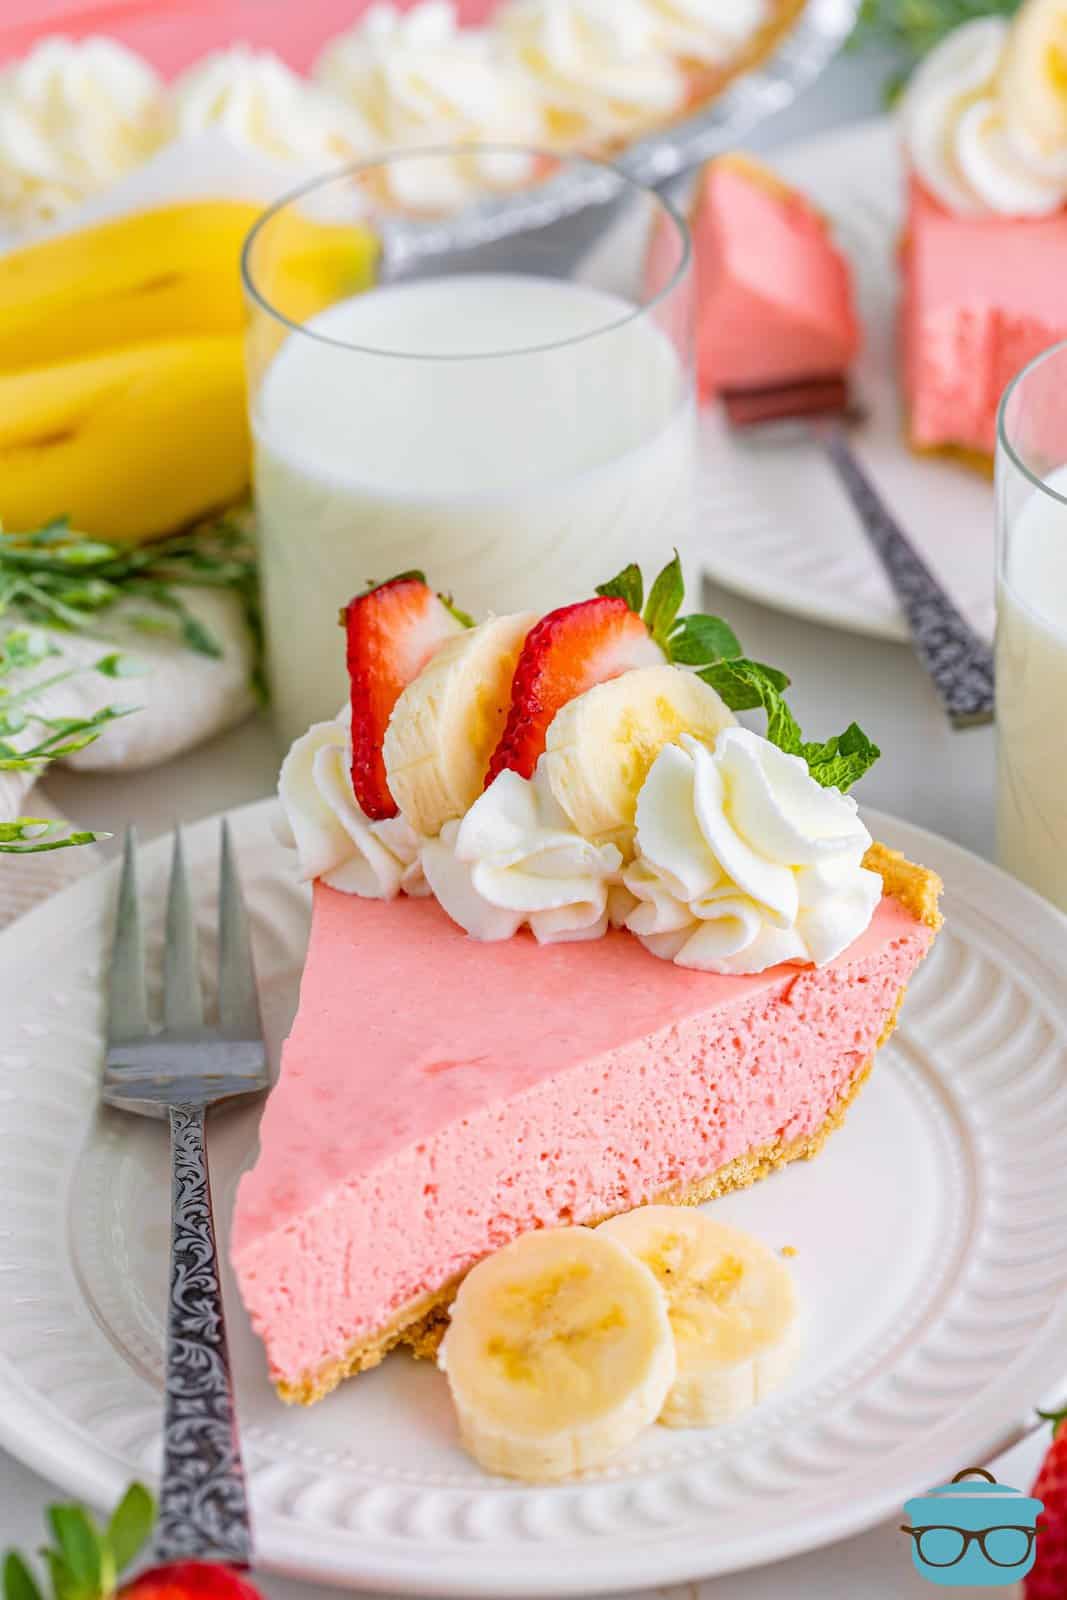 A slice of Strawberry Banana Jello Pie on a plate.